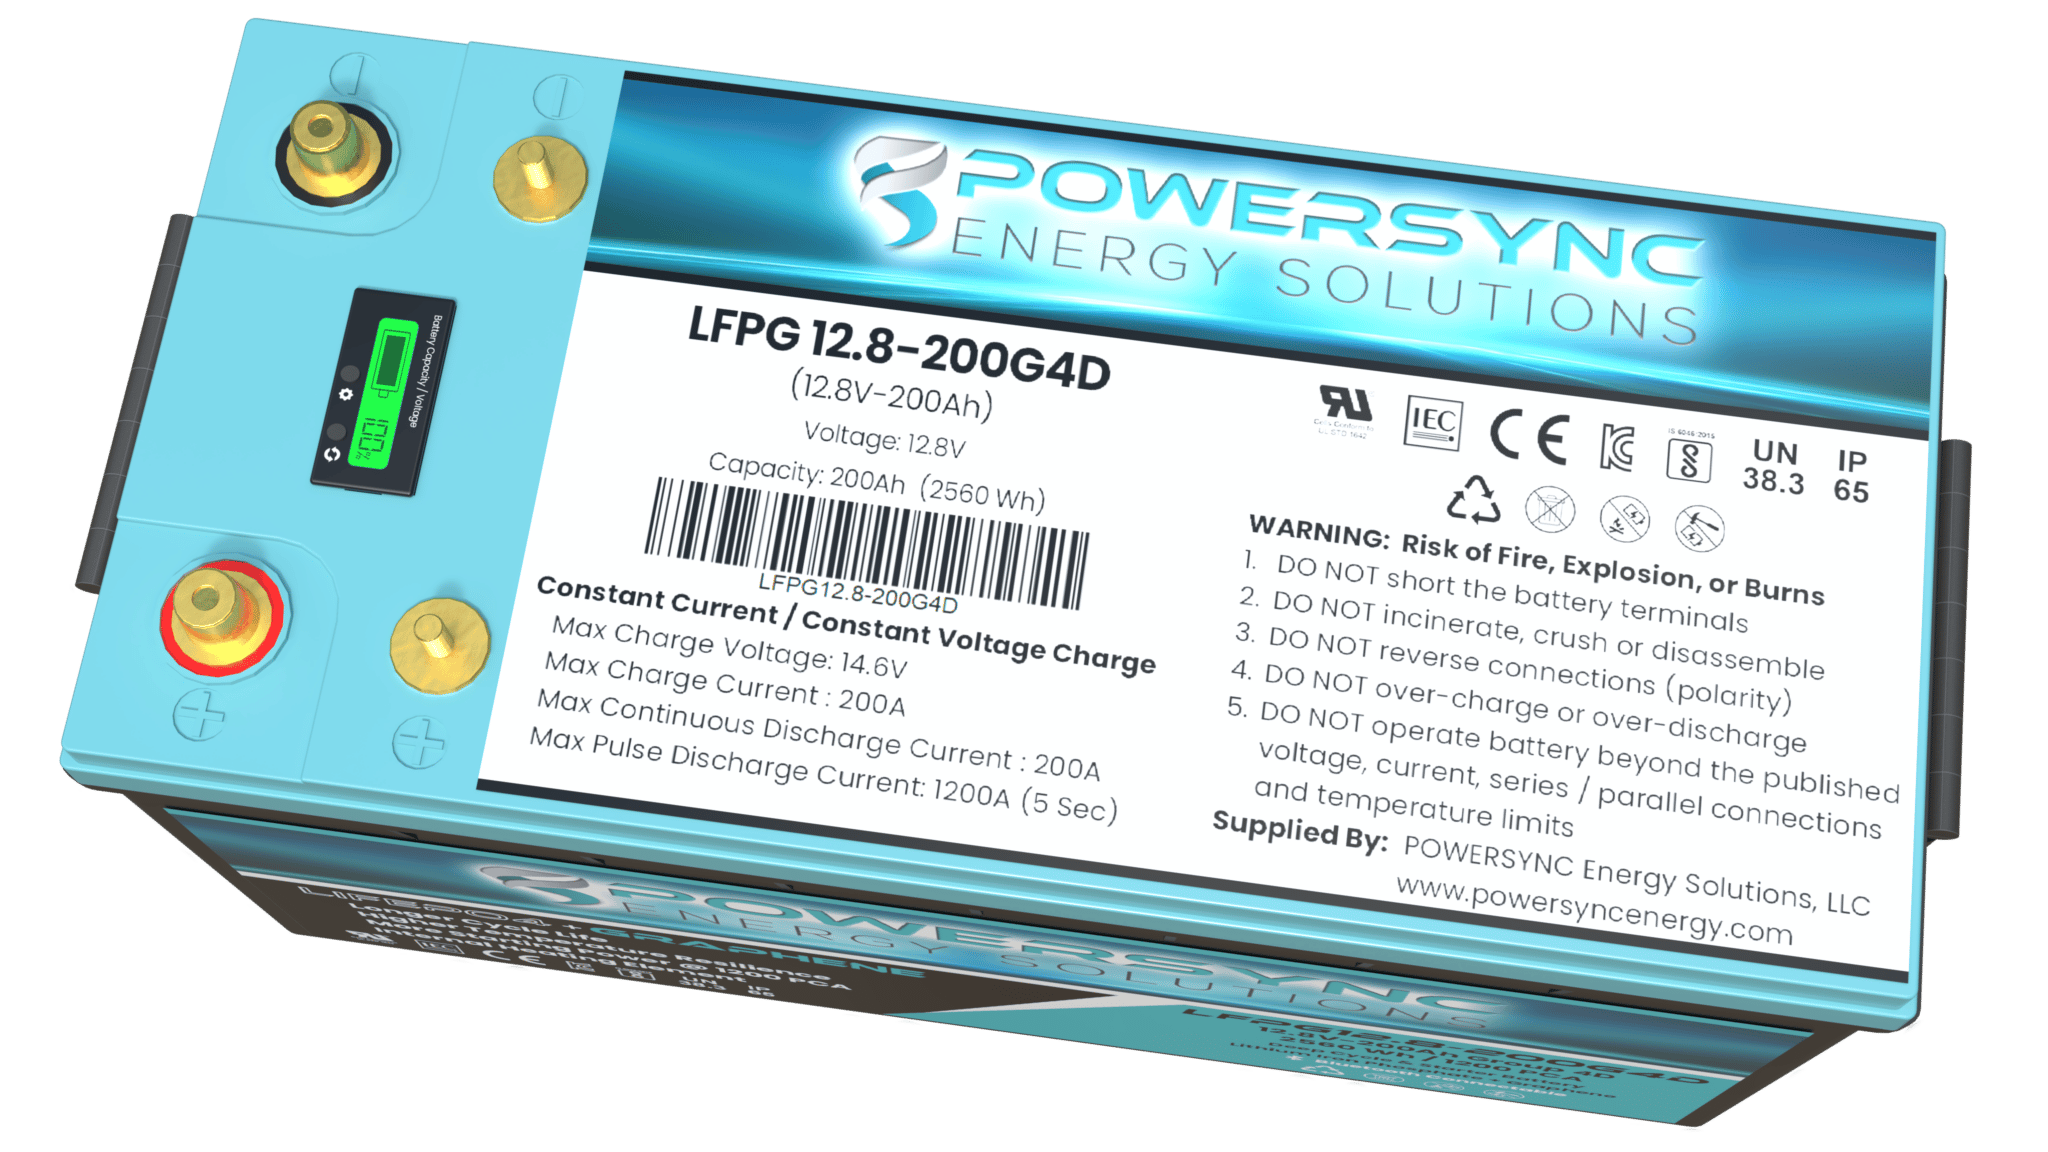 LFPG12.8-200G4D LiFePO4+Graphene Dual Purpose Lithium Battery - POWERSYNC  Energy Solutions